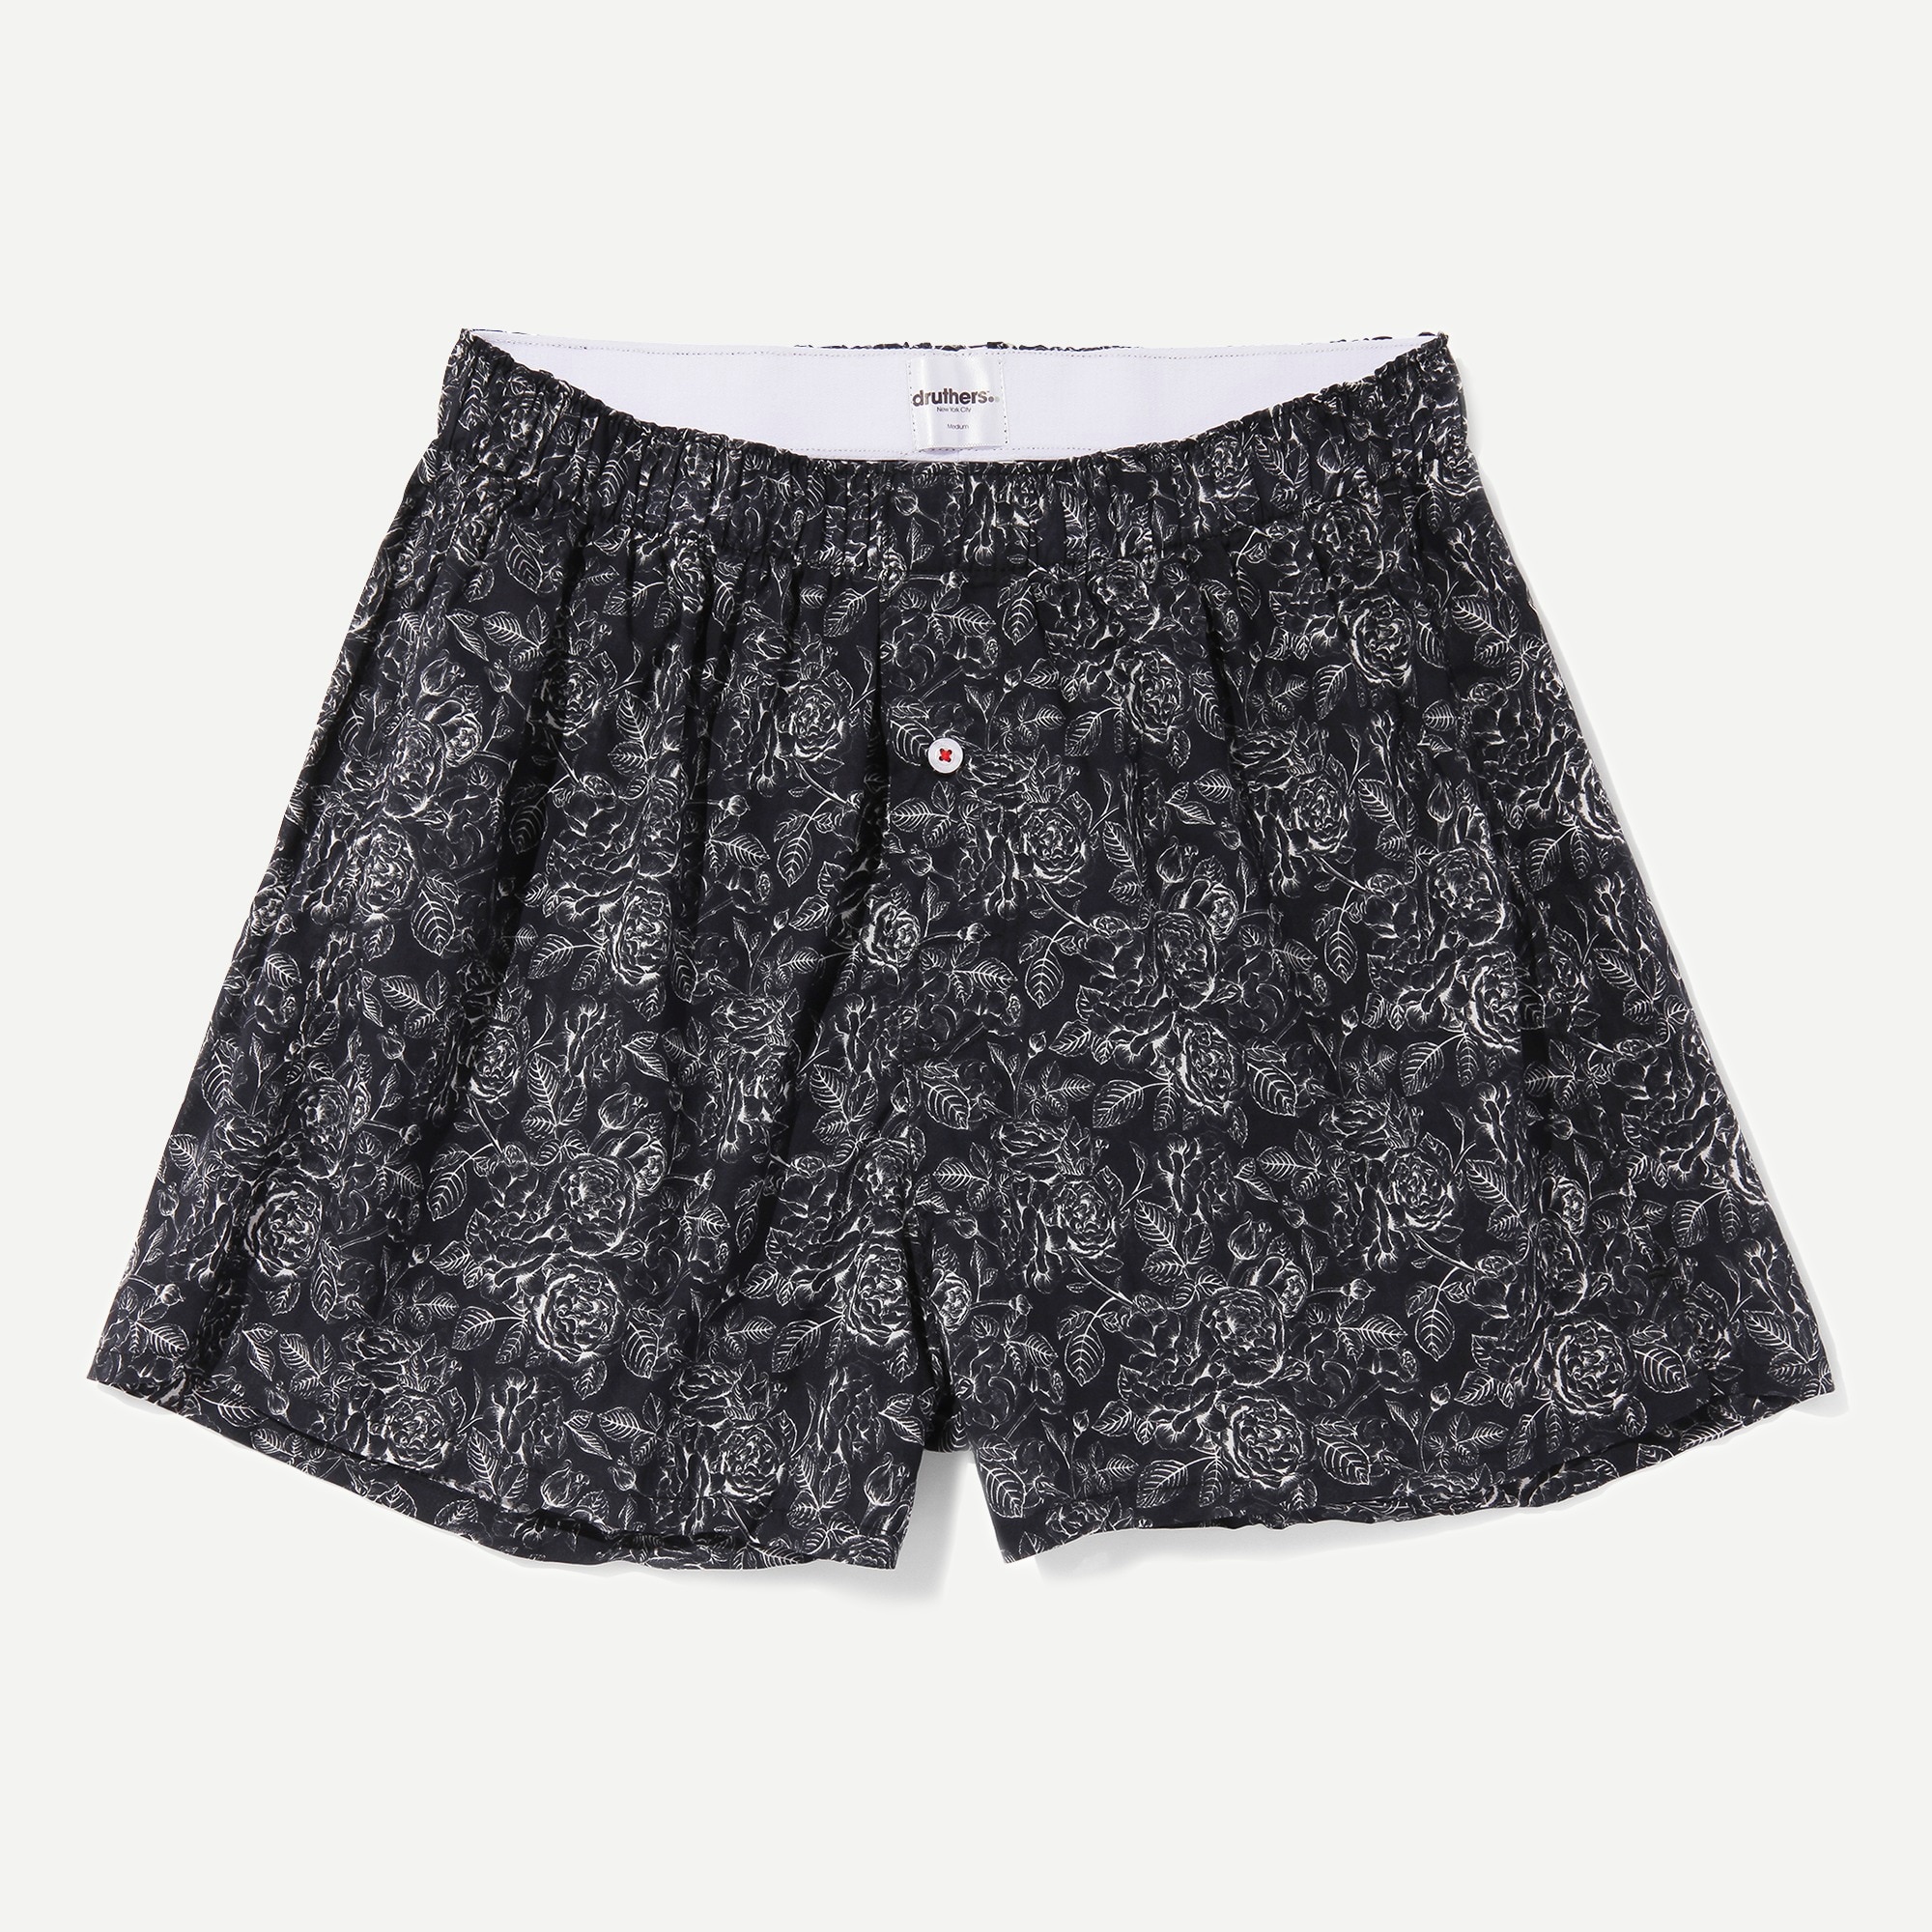 Druthers Organic Cotton Oahu Boxer Shorts - Navy, Underwear